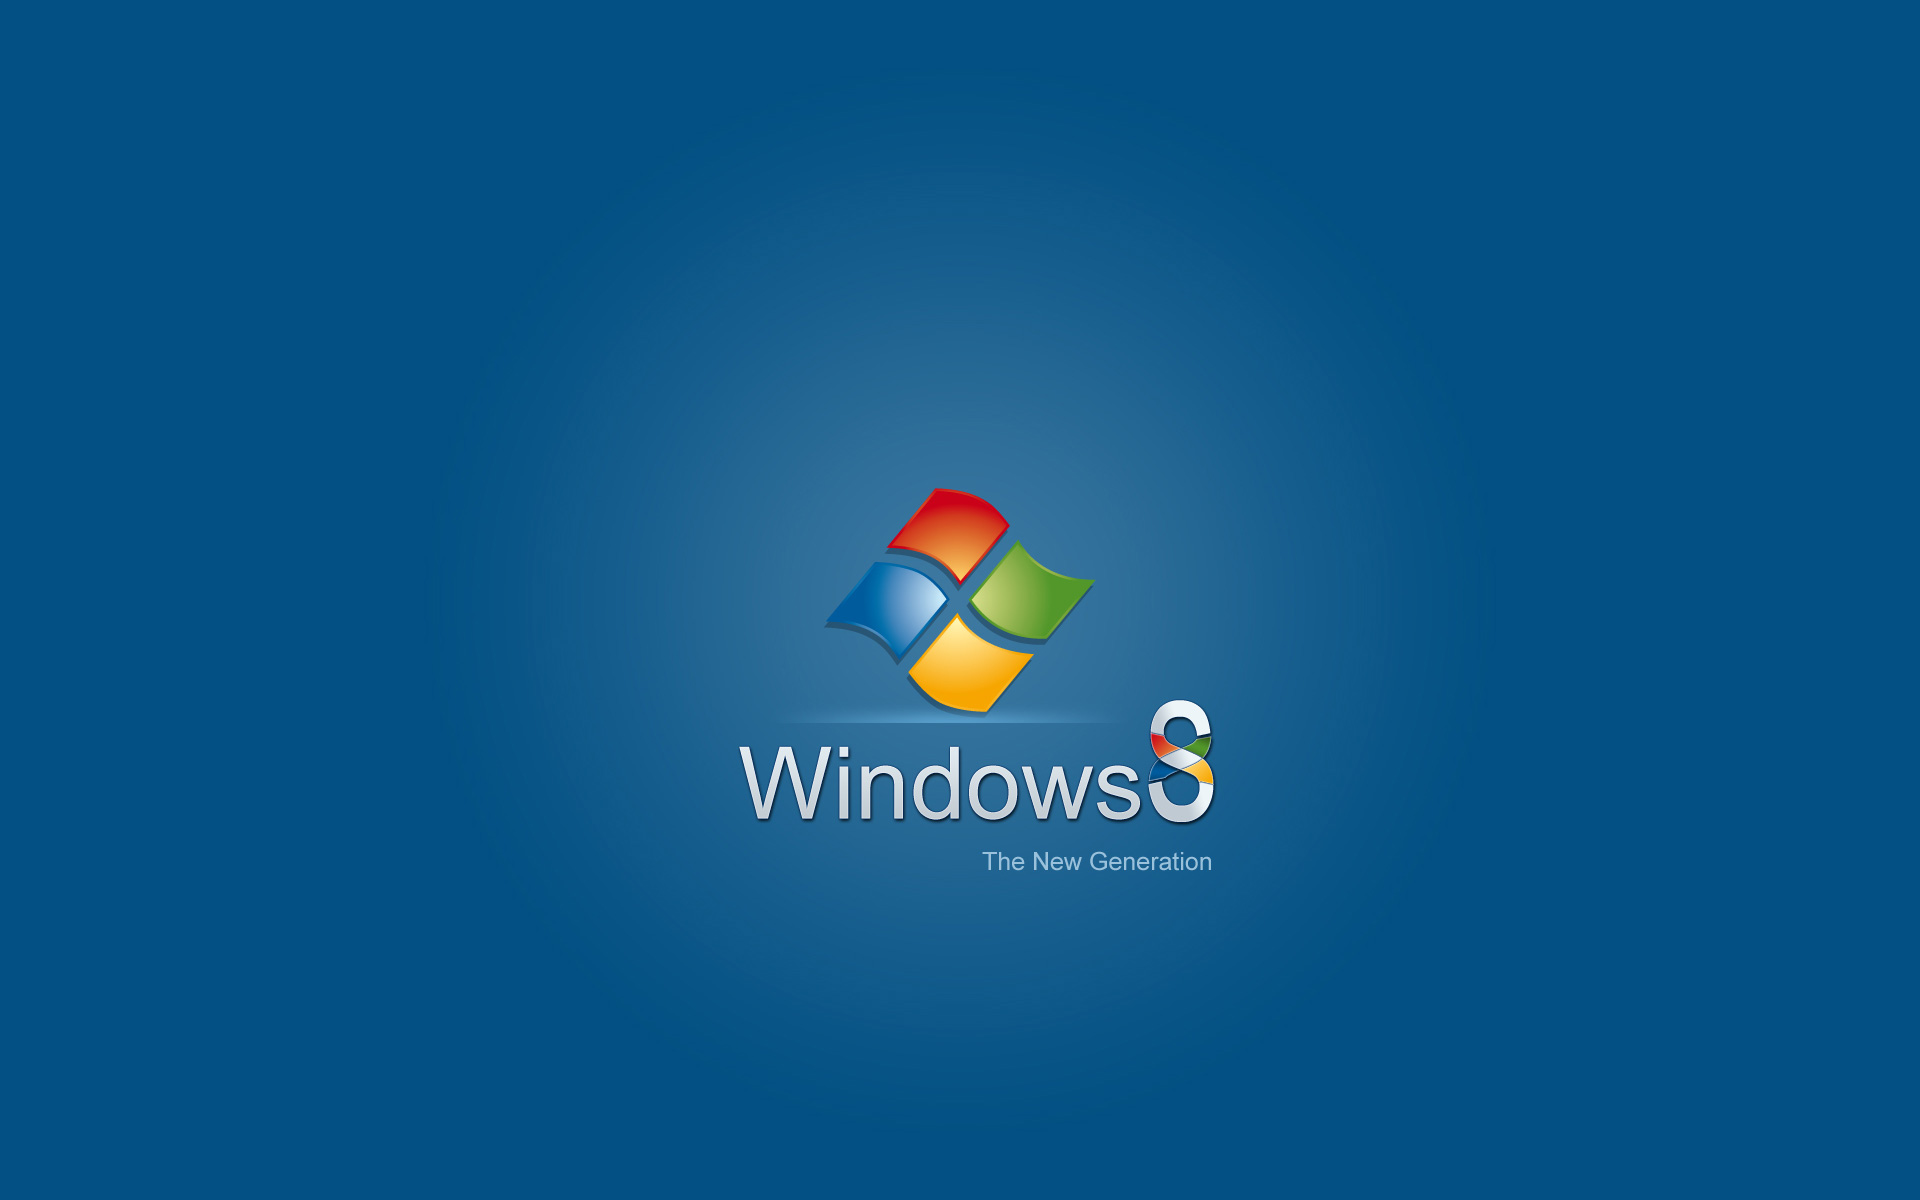 Windows 8 New Generation